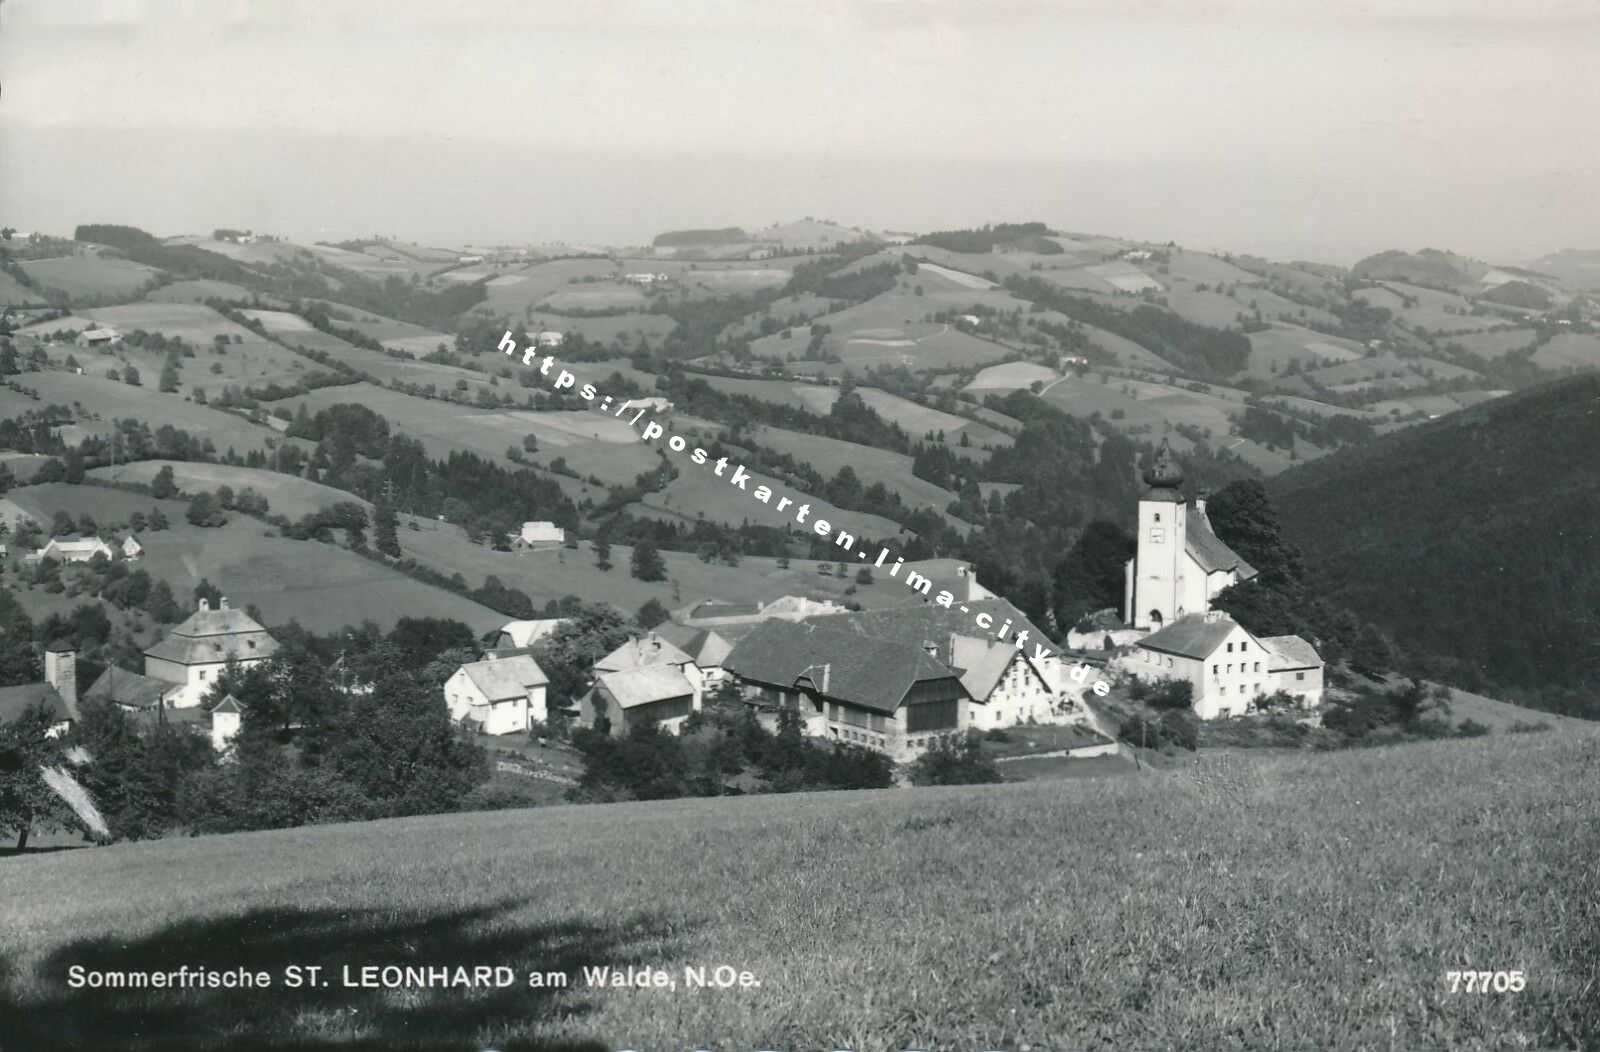 St. Leonhard am Walde 1973